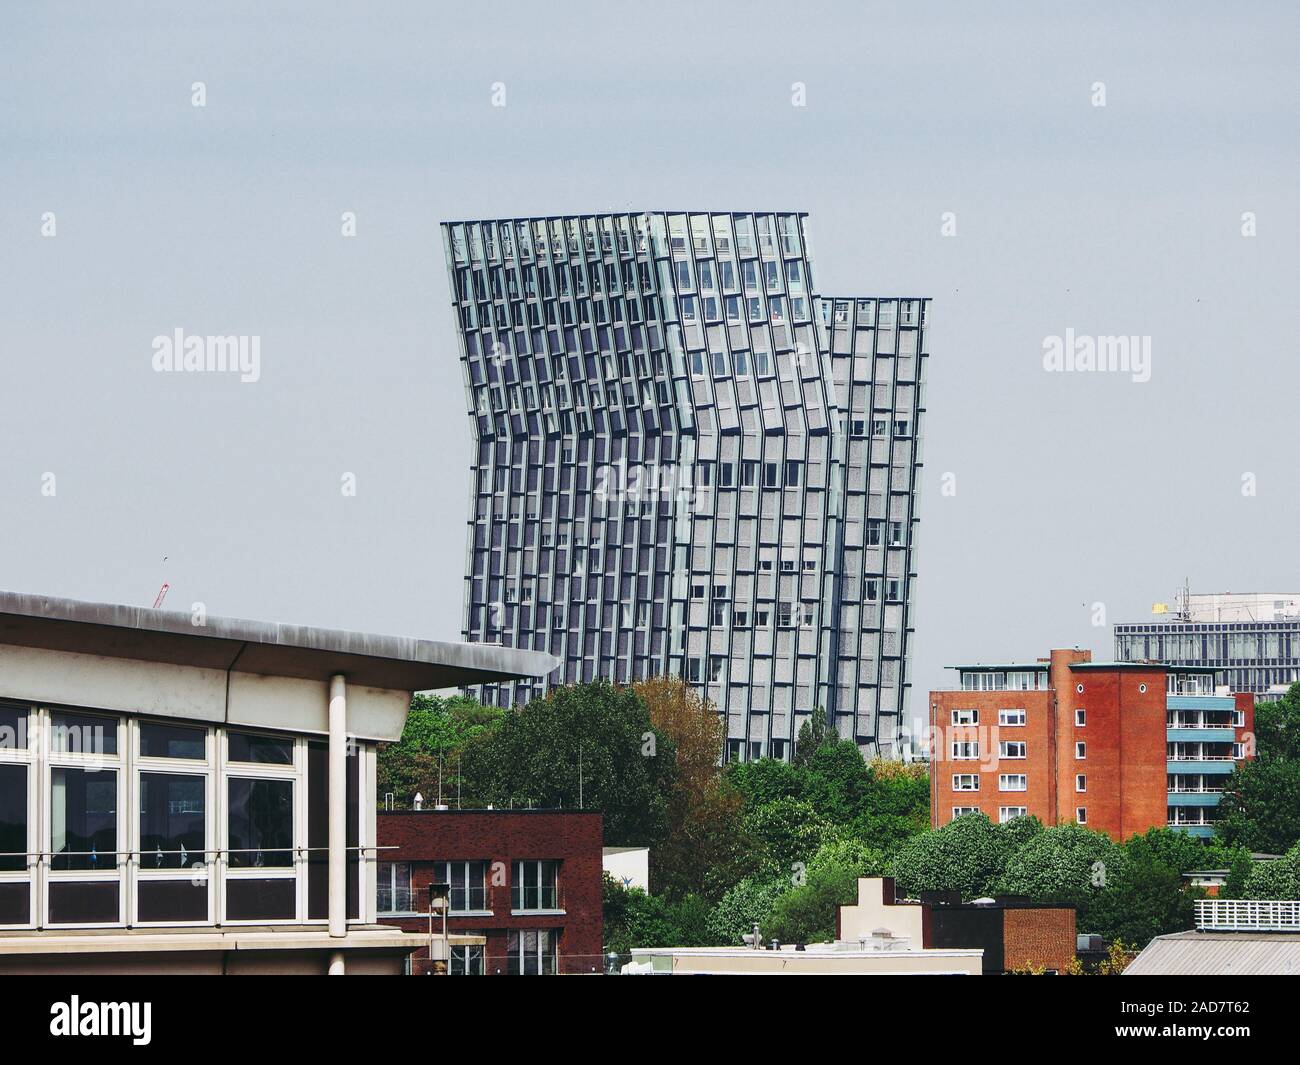 Tanzende Tuerme Dancing Towers In Hamburg Stock Photo Alamy